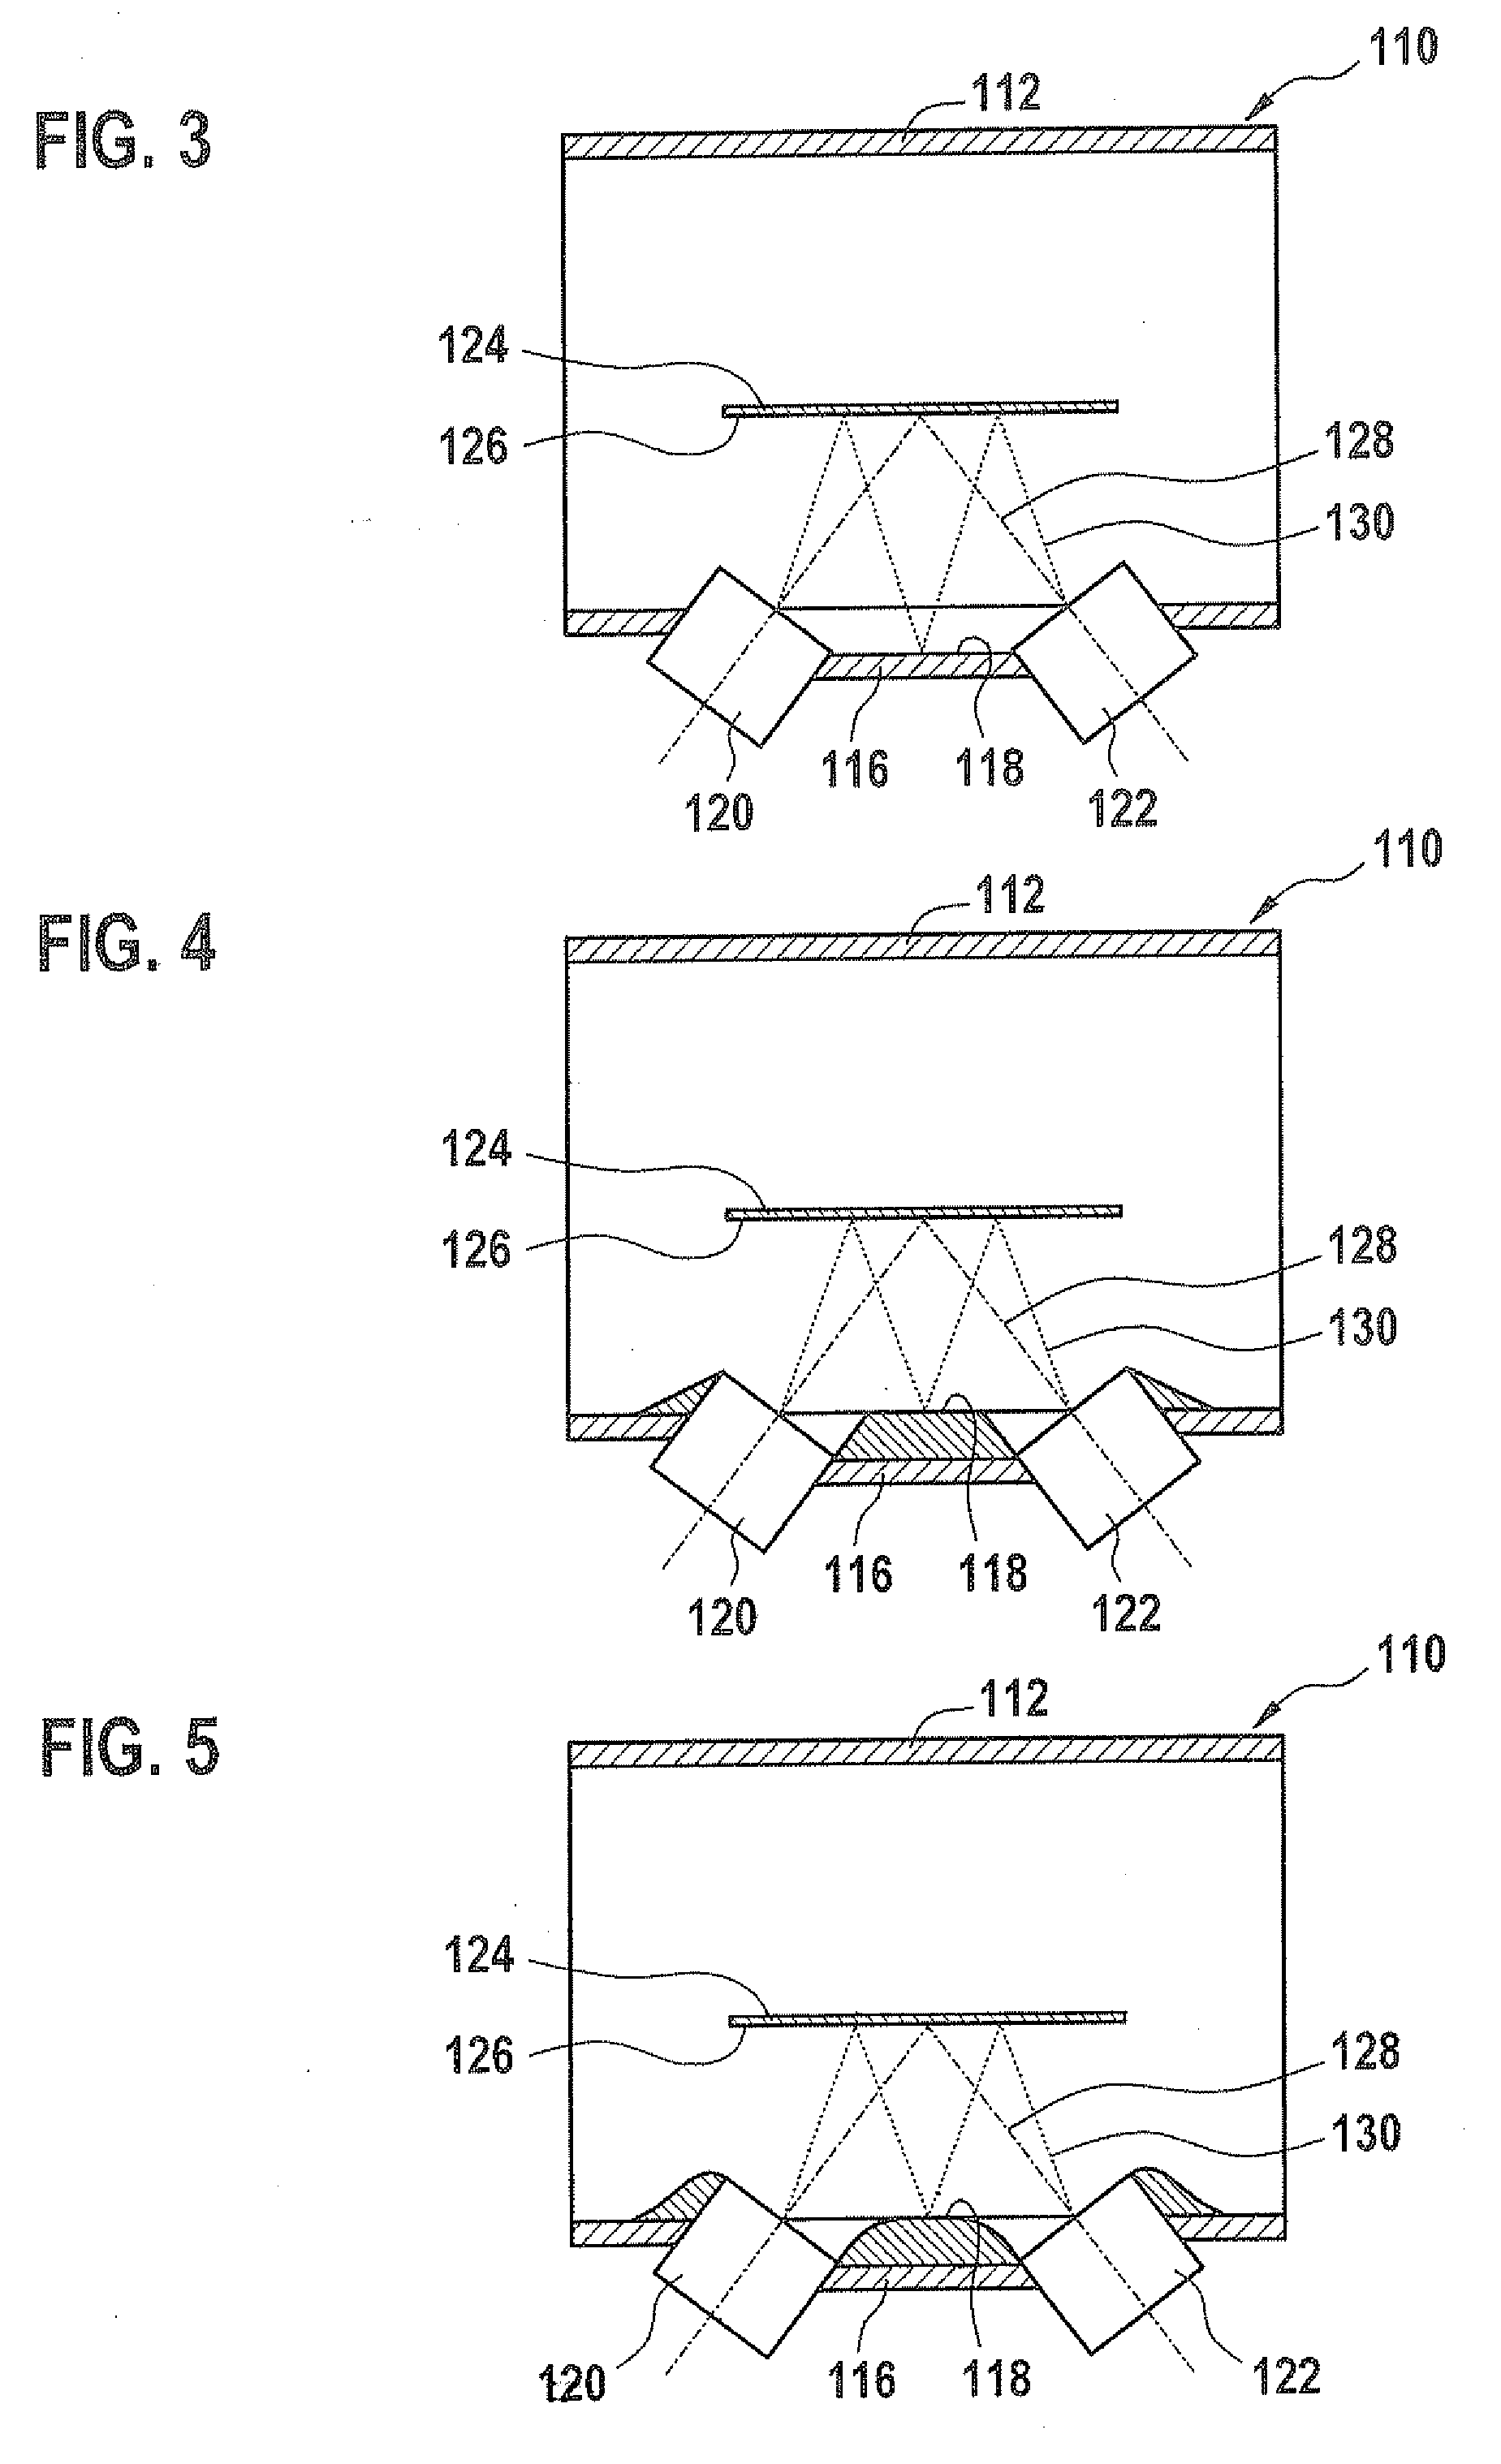 Ultrasonic flow sensor for use in a fluid medium